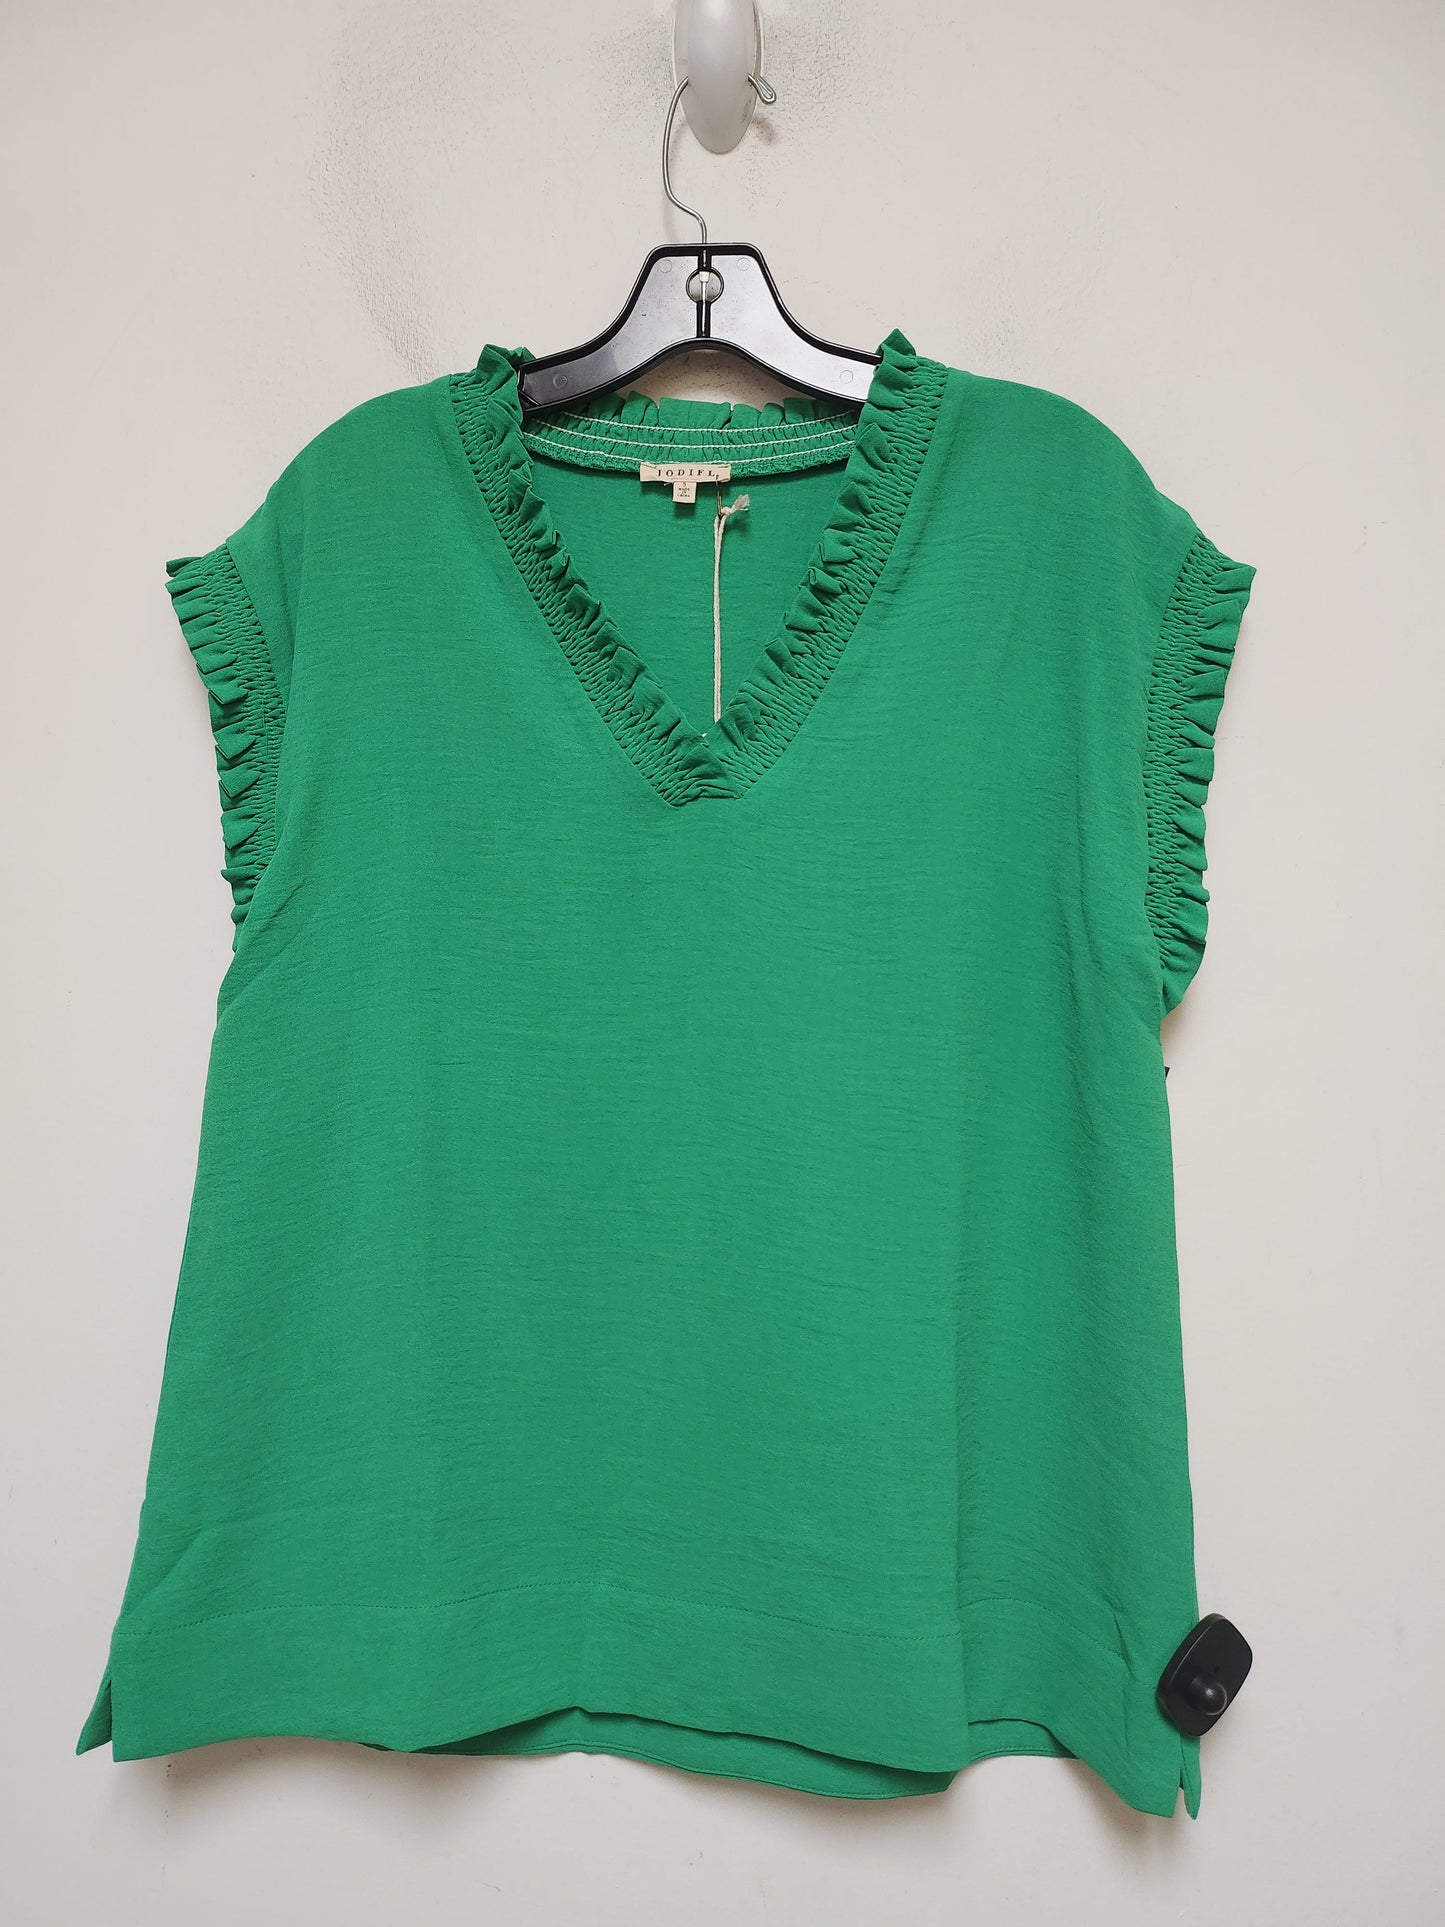 Green Top Sleeveless Jodifl, Size S